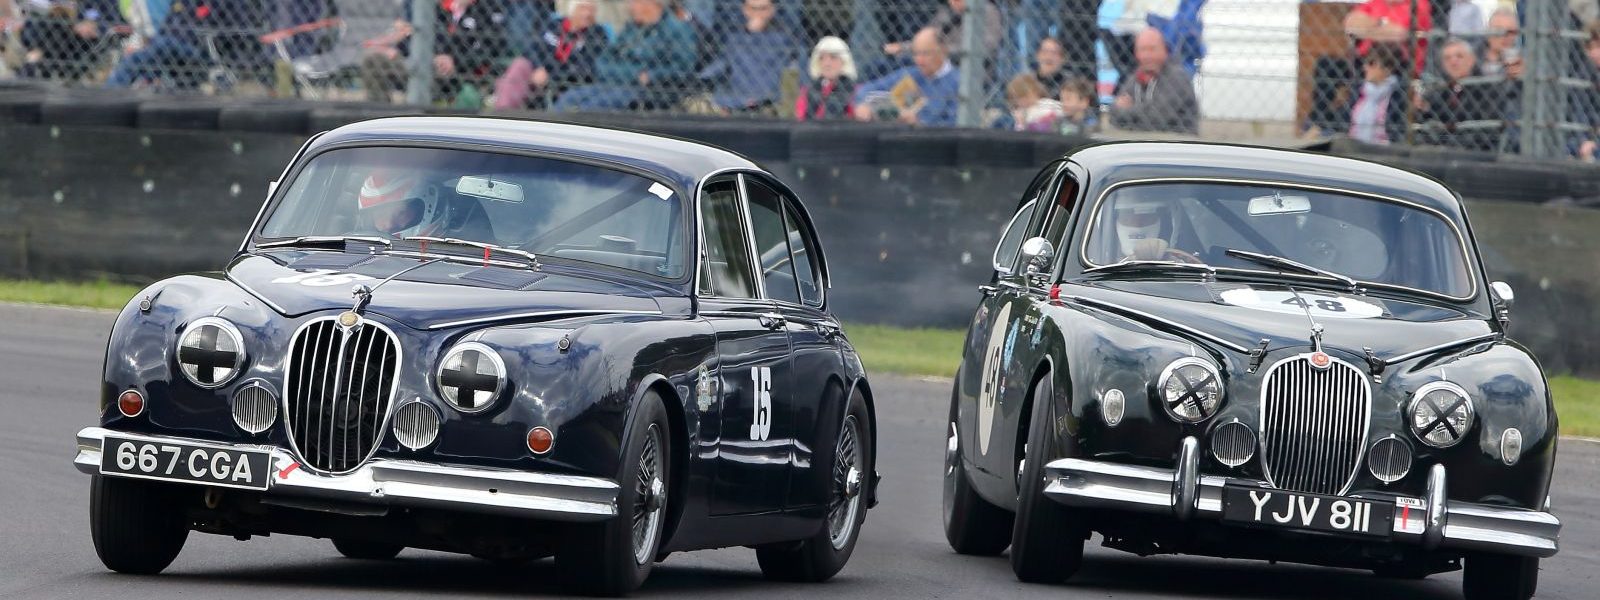 historic racing cars